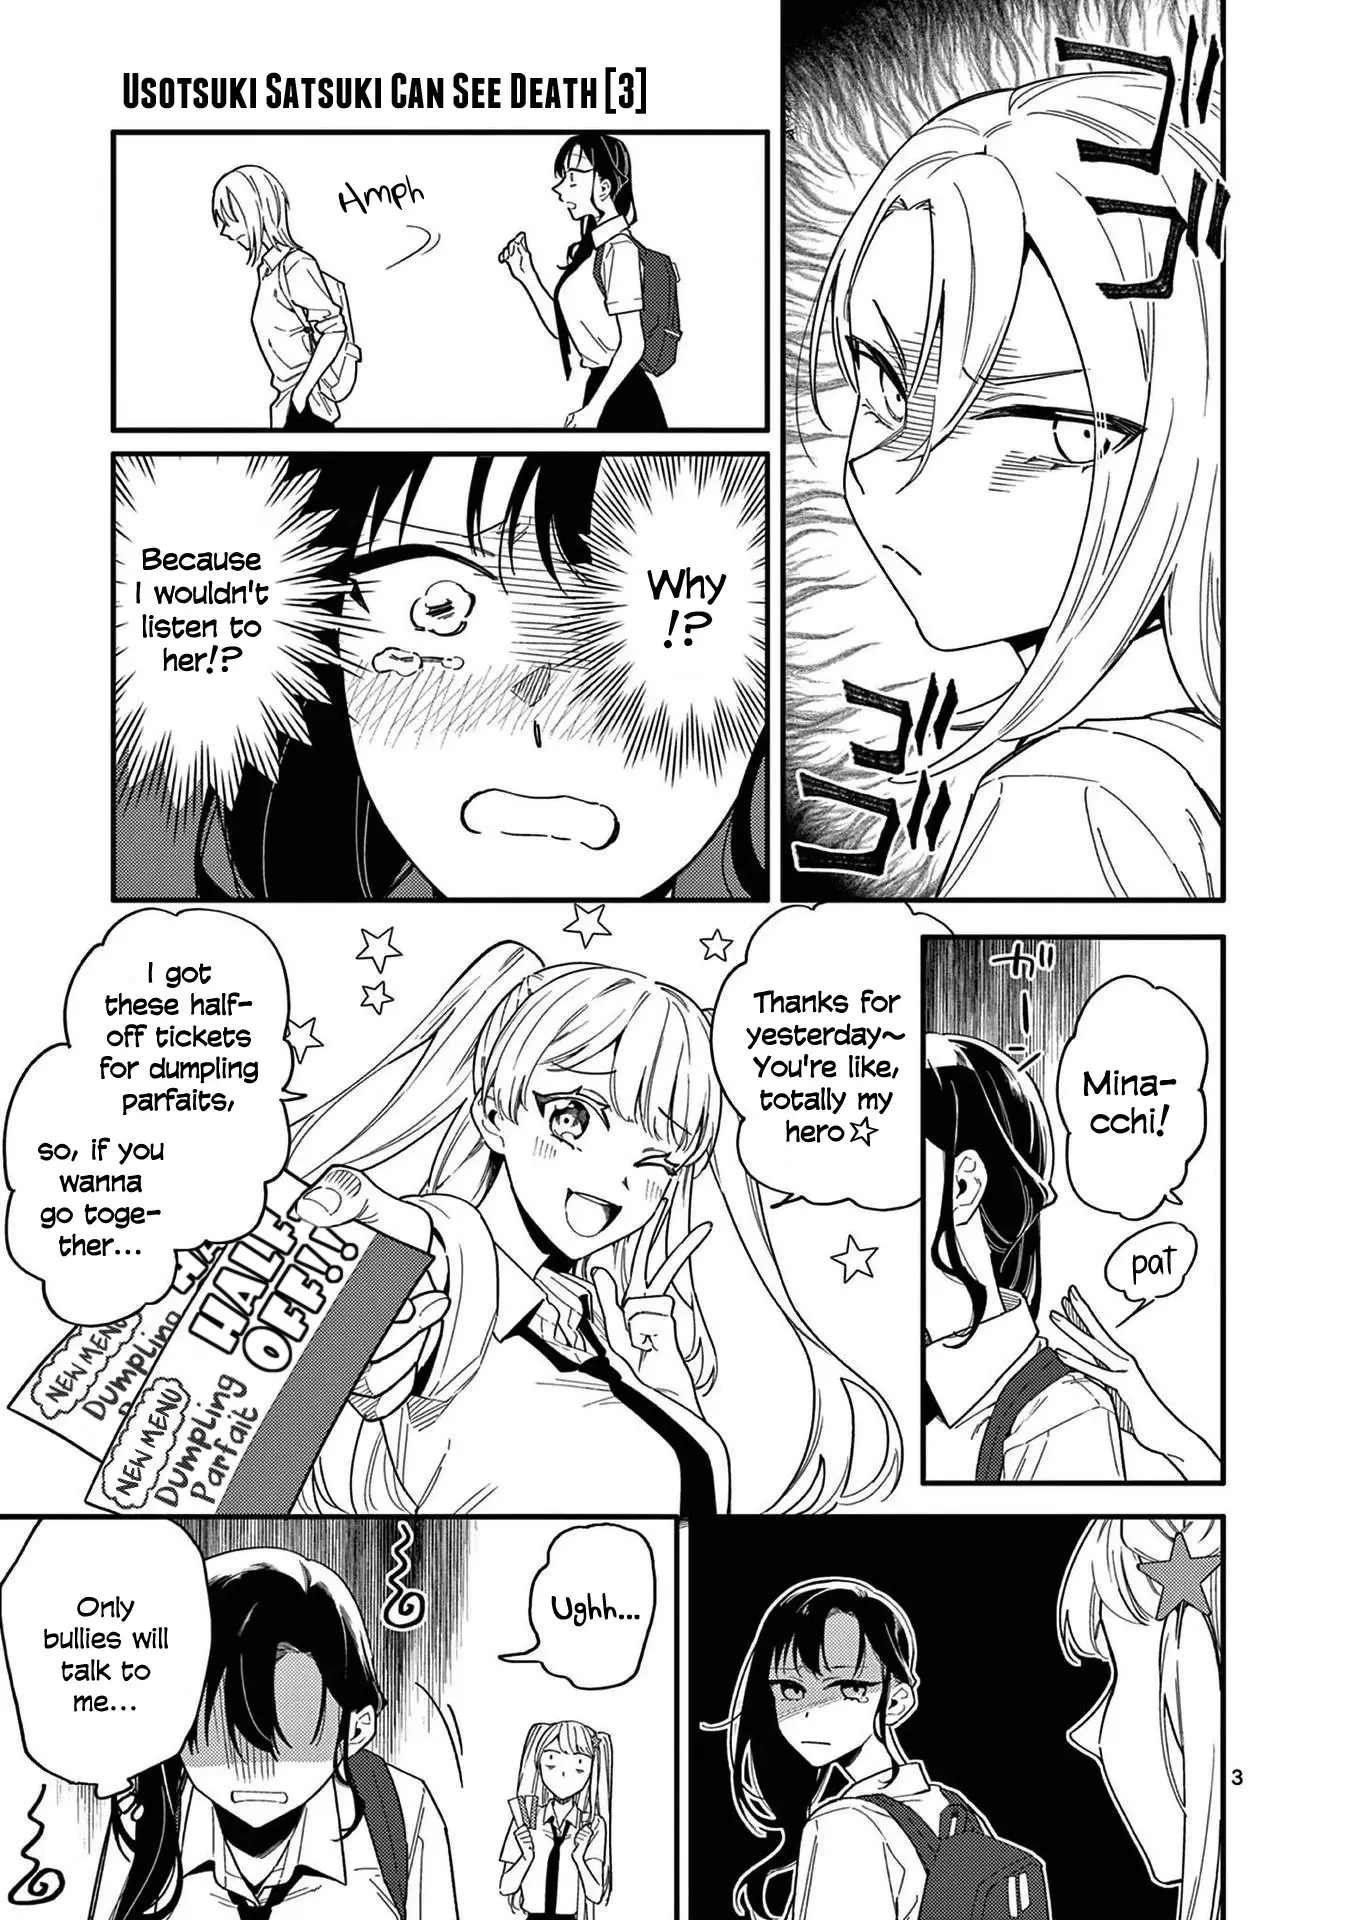 Liar Satsuki Can See Death - 22 page 3